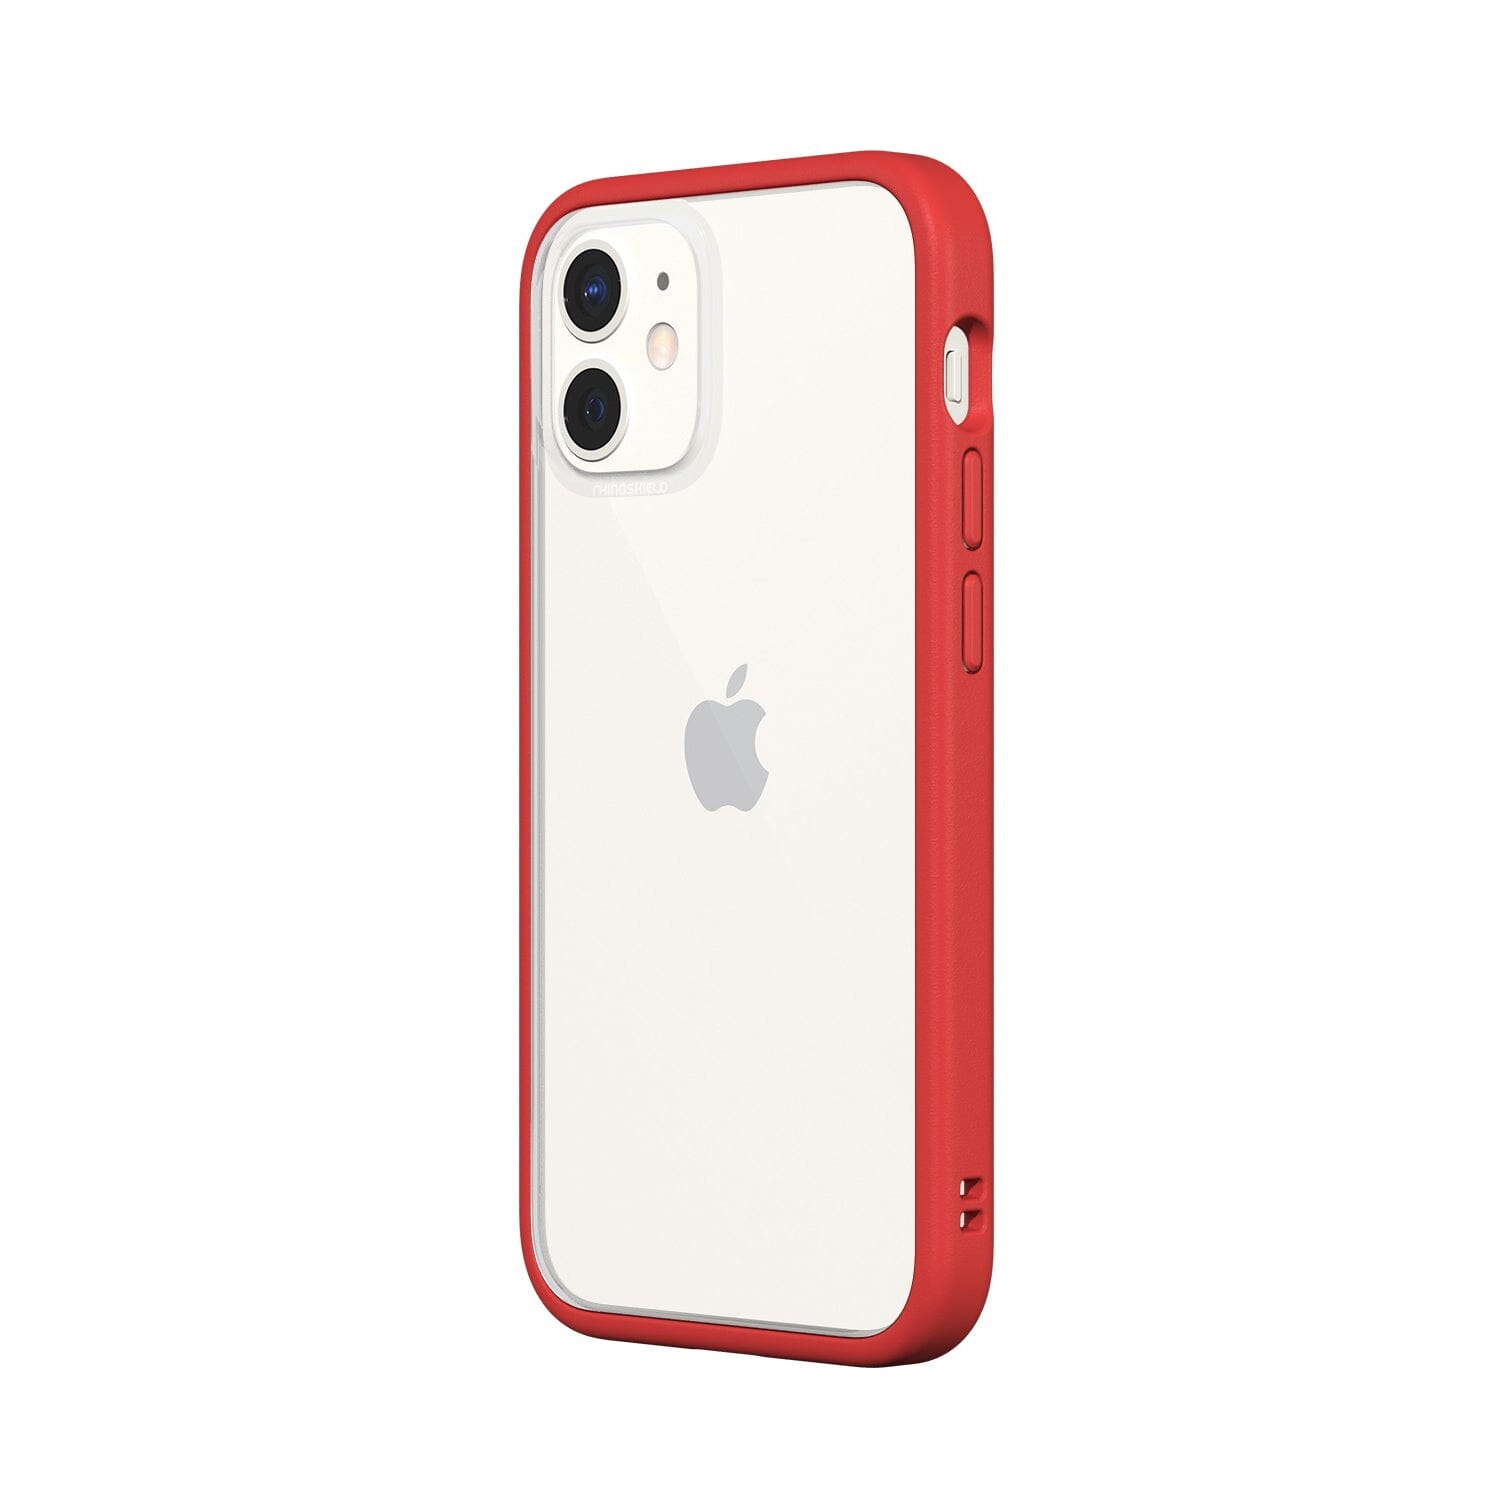 RhinoShield Mod NX Modular Case for iPhone 12 Series (2020) iPhone 12 Series RhinoShield iPhone 12 mini 5.4" Red 